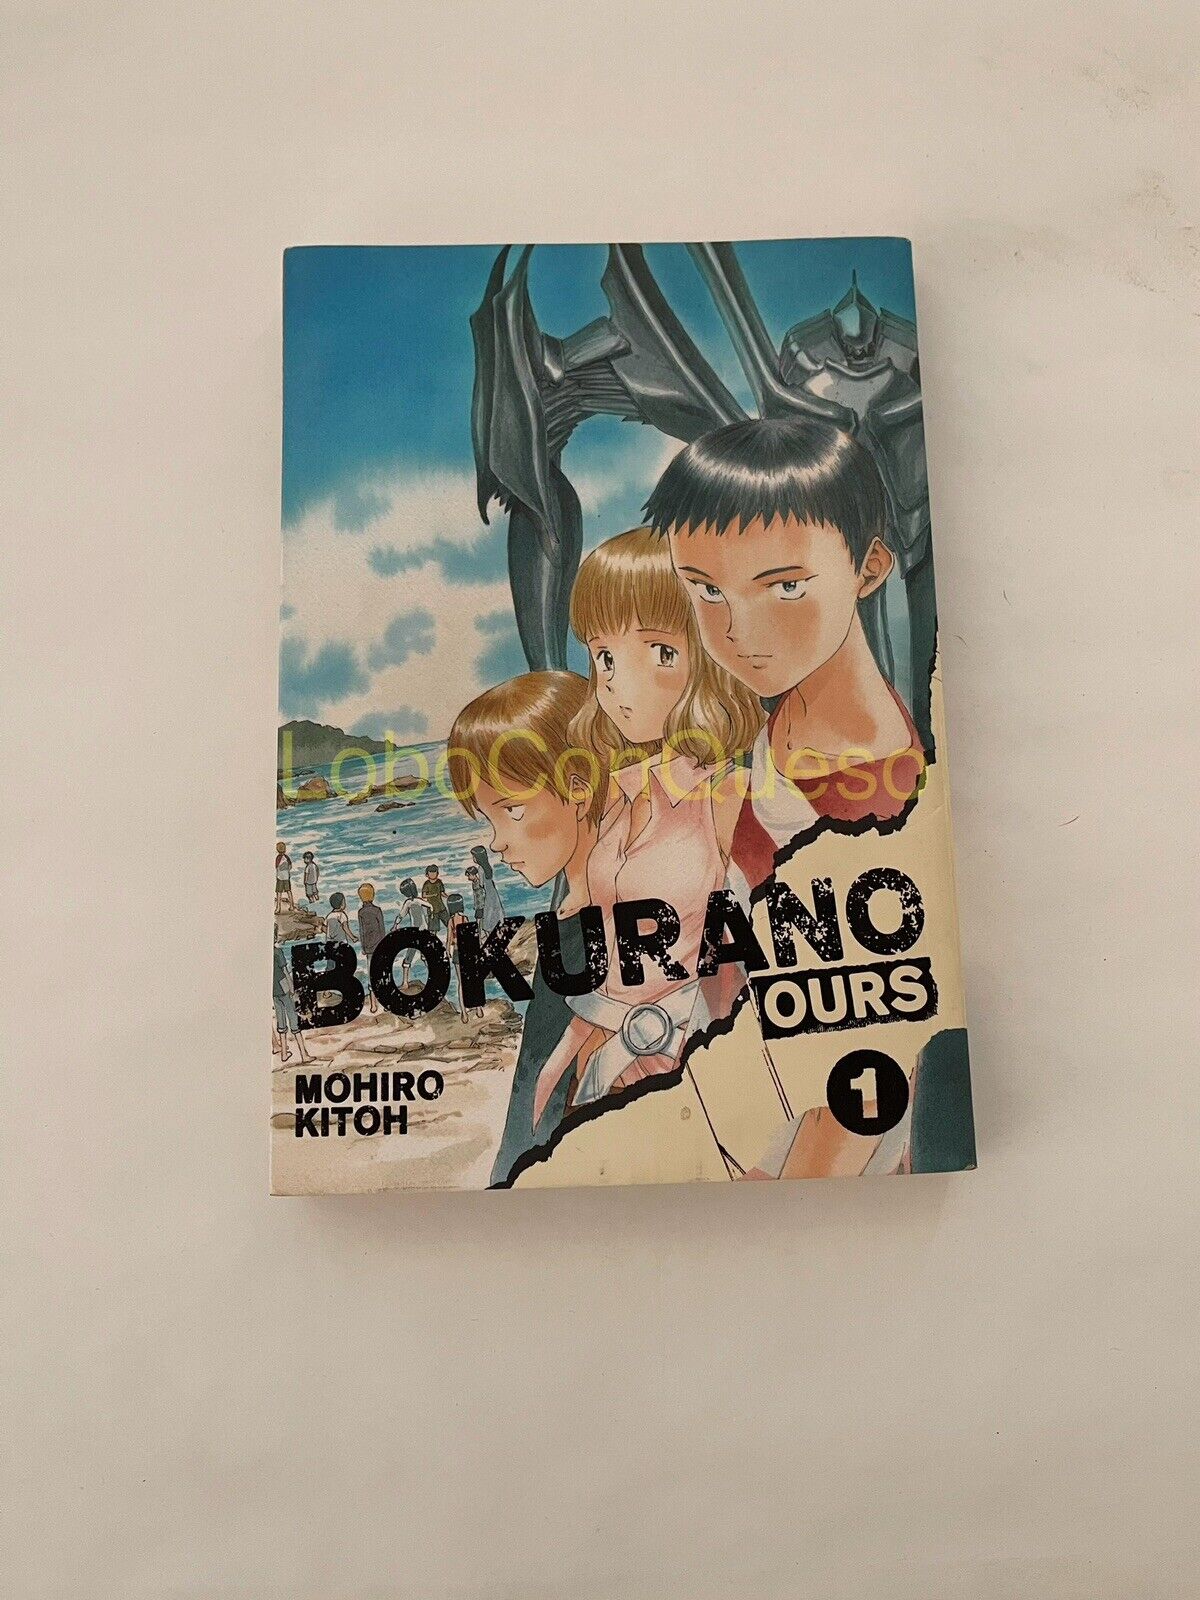 Bokurano Ours Vol 1 by Mohiro Kitoh - English